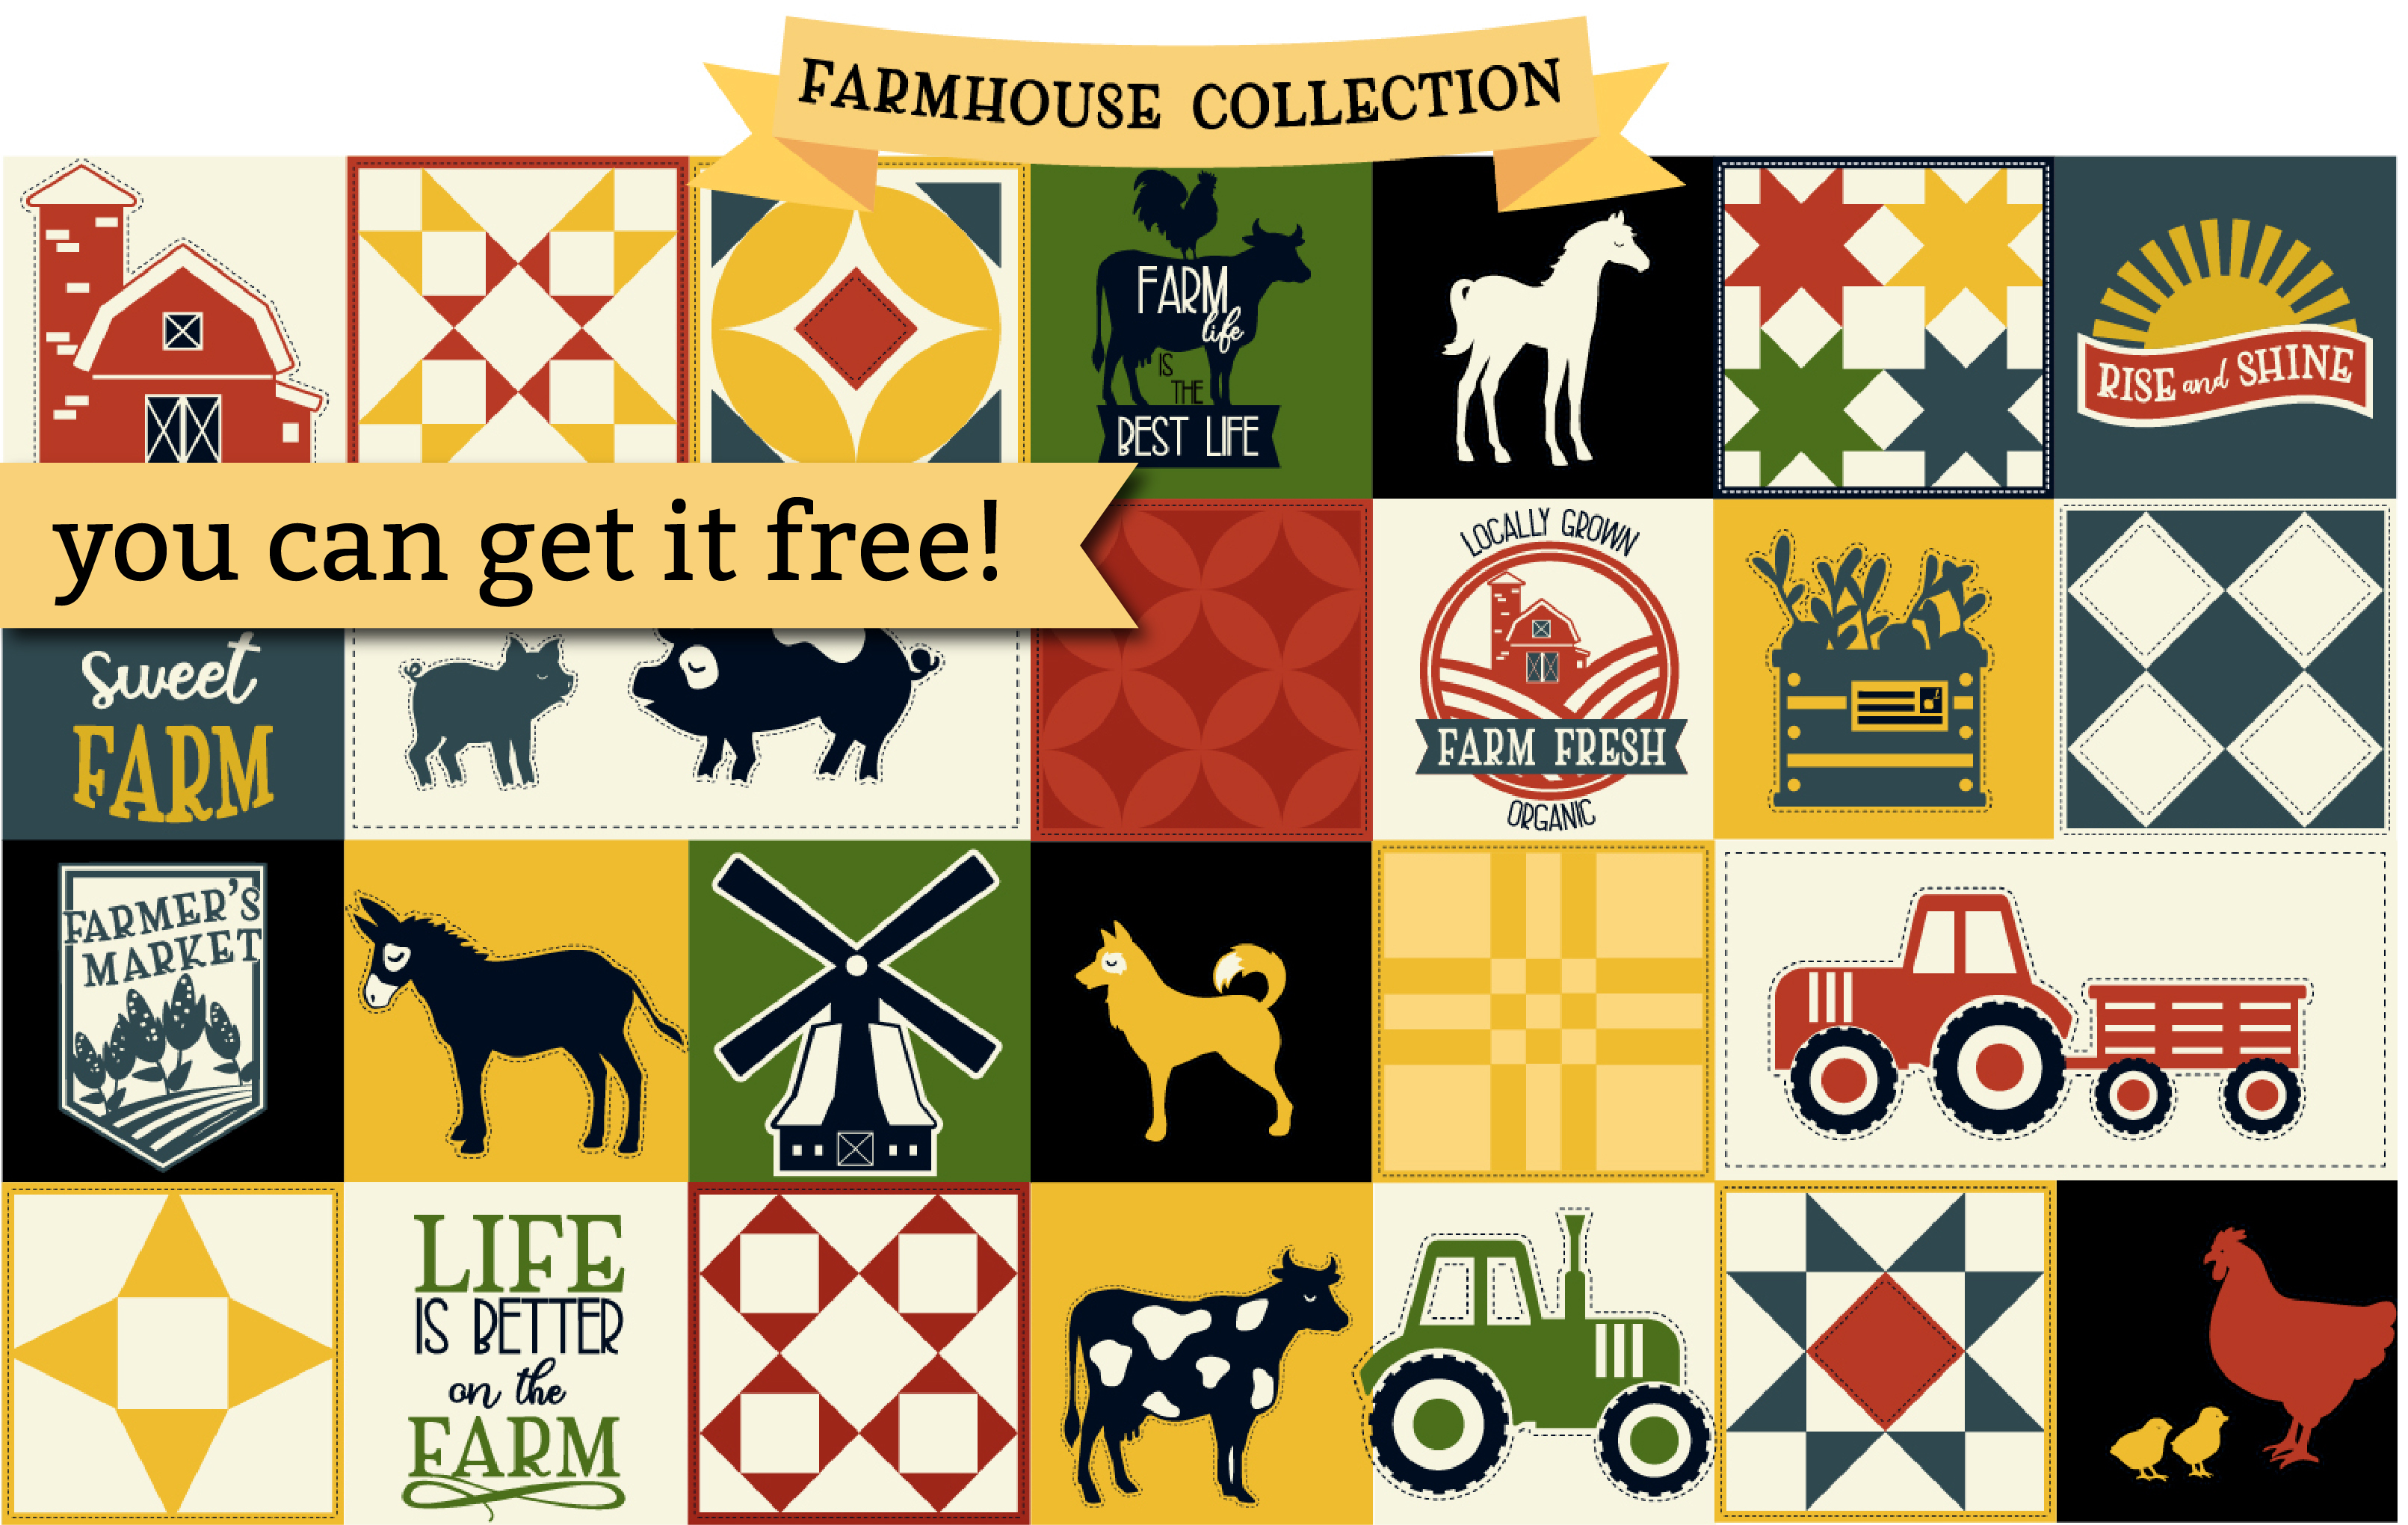 Earn the Farmhouse - Promotional Bundle - Free